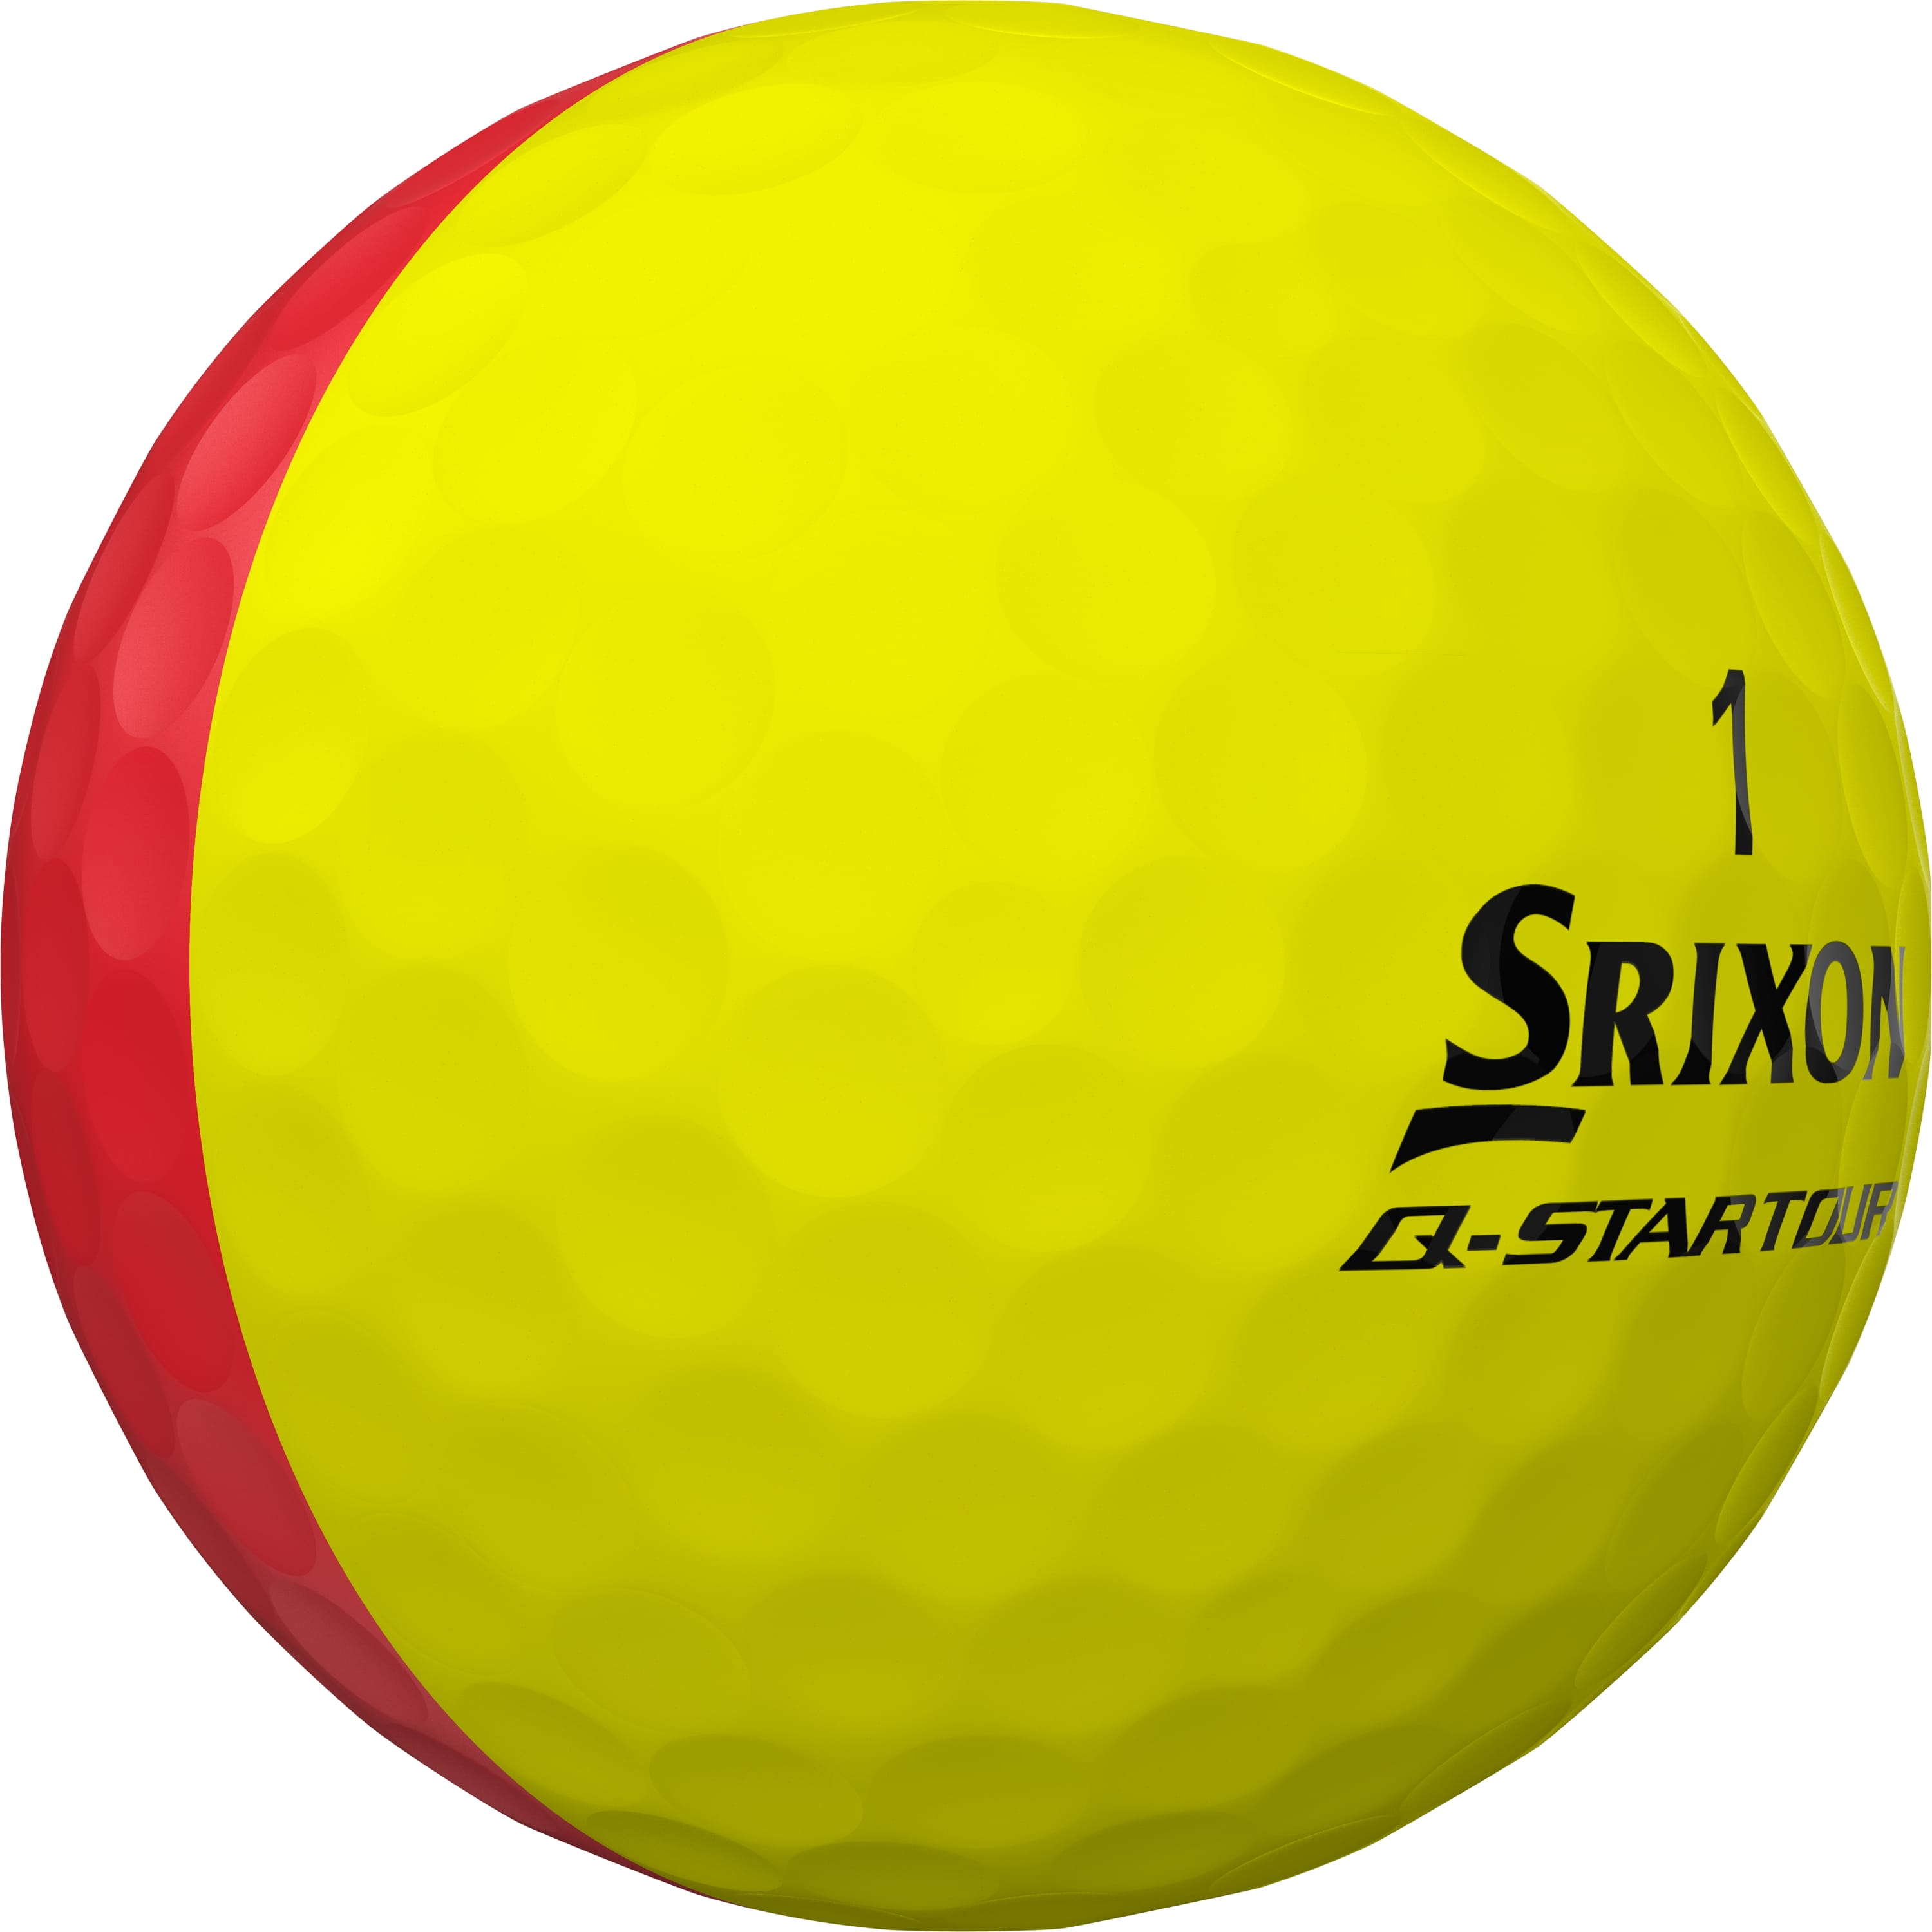 Srixon Q-Star Tour DIVIDE Golfbälle, yellow/red